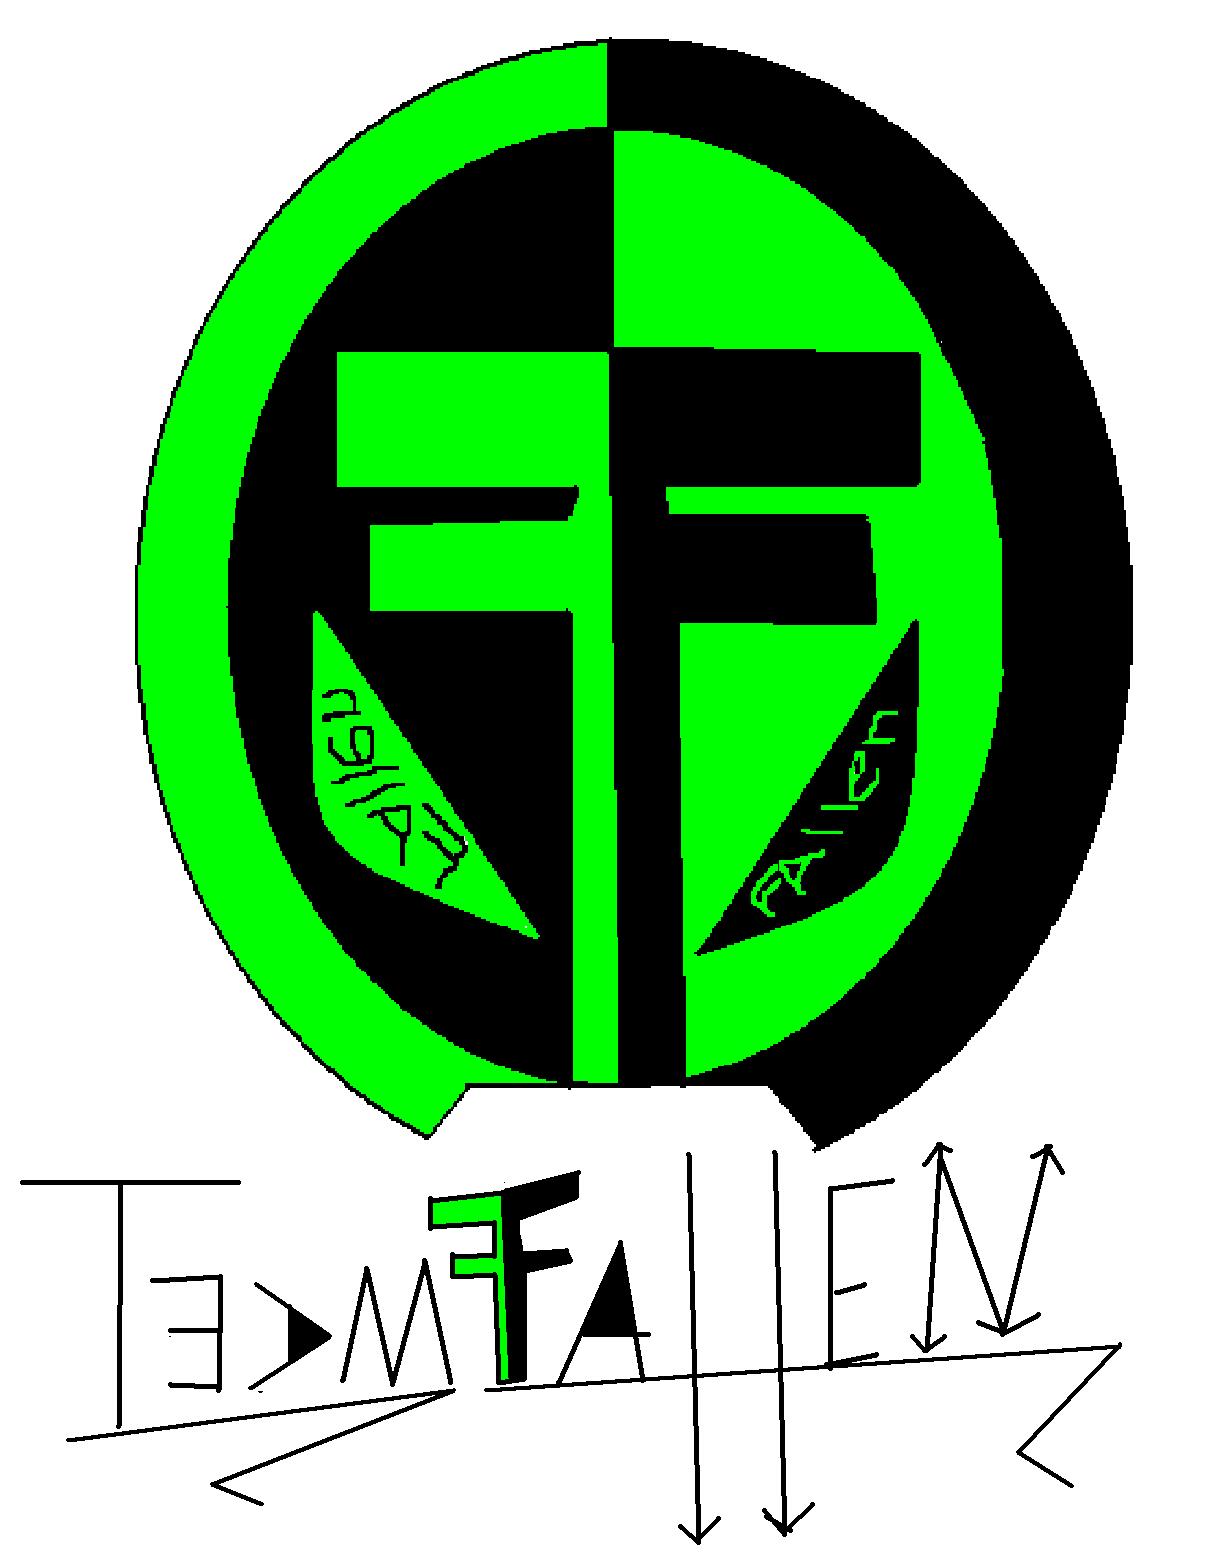 team fallens logo by Forestdahedgehog